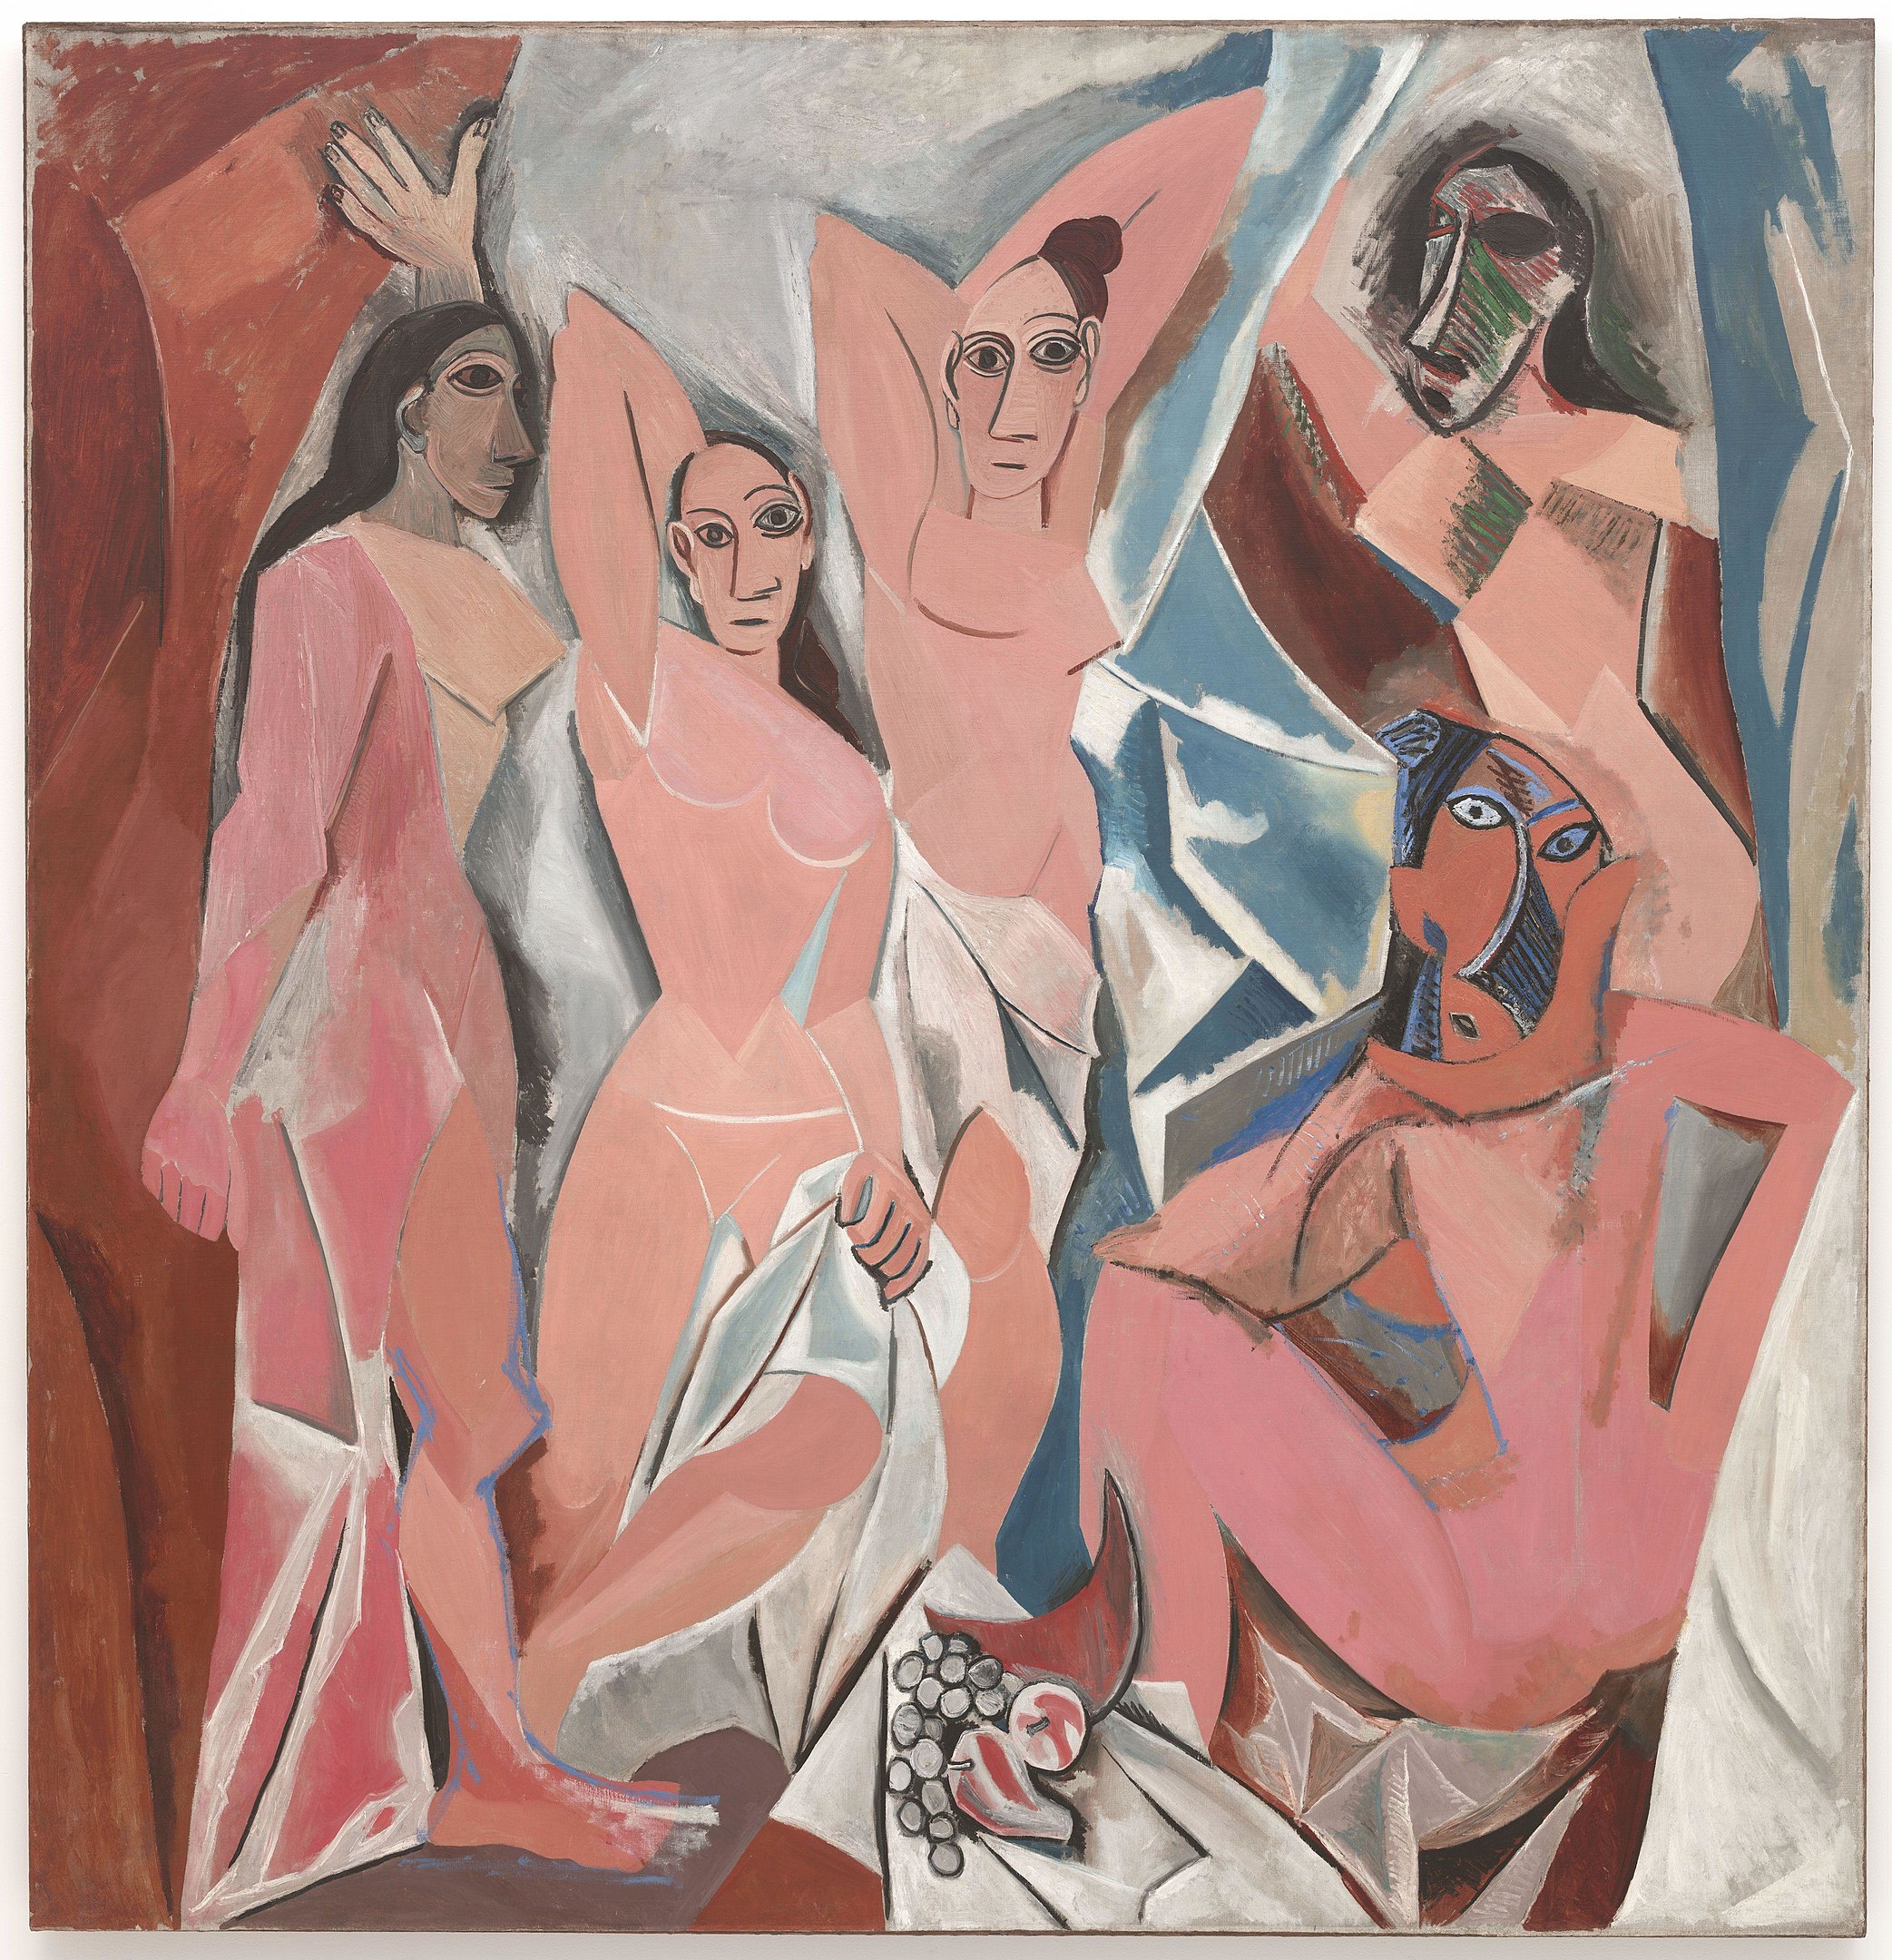  Pablo Picasso - Museum of Modern Art, New York